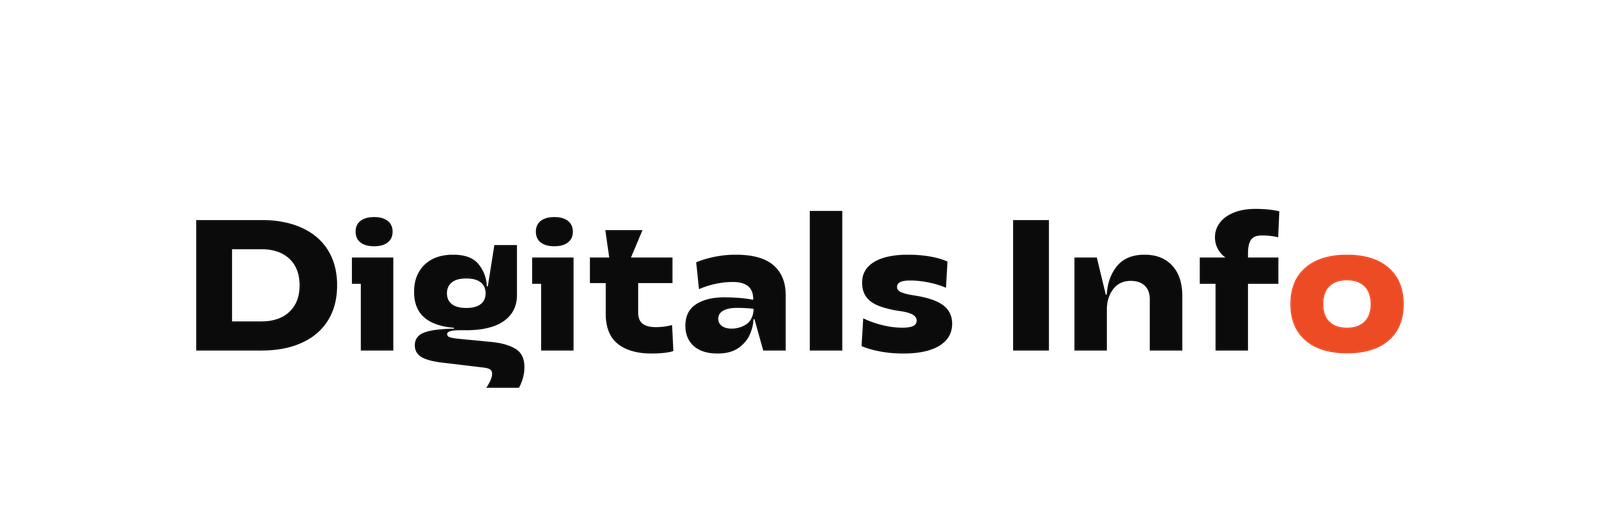 Digitalsinfo logo- digital marketing company- png